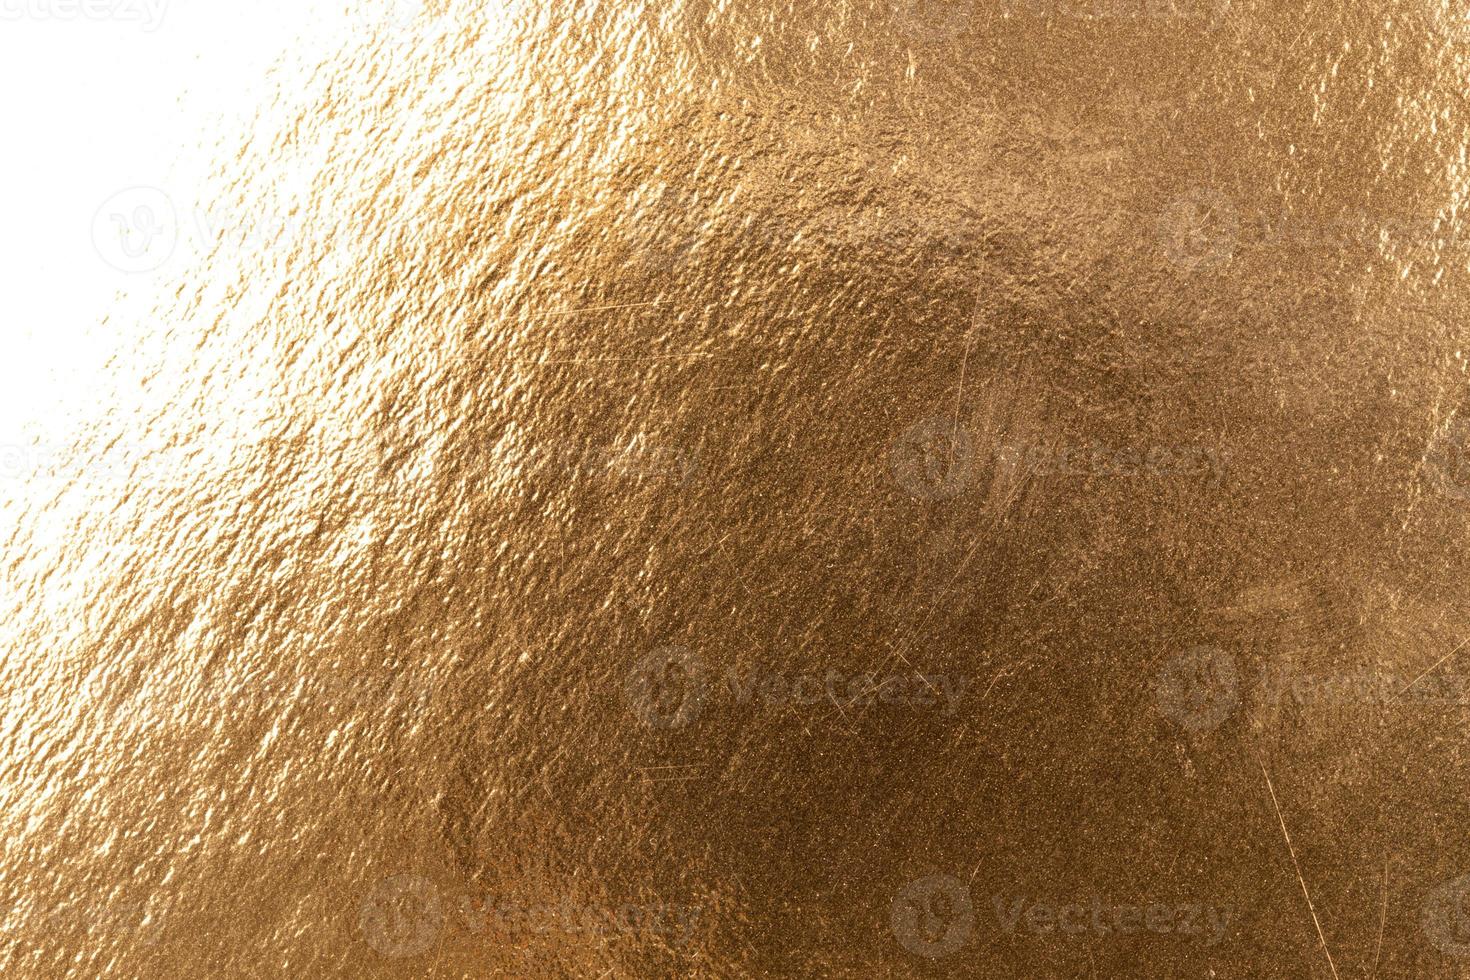 Abstract texture of golden metal macro shot background at close range photo